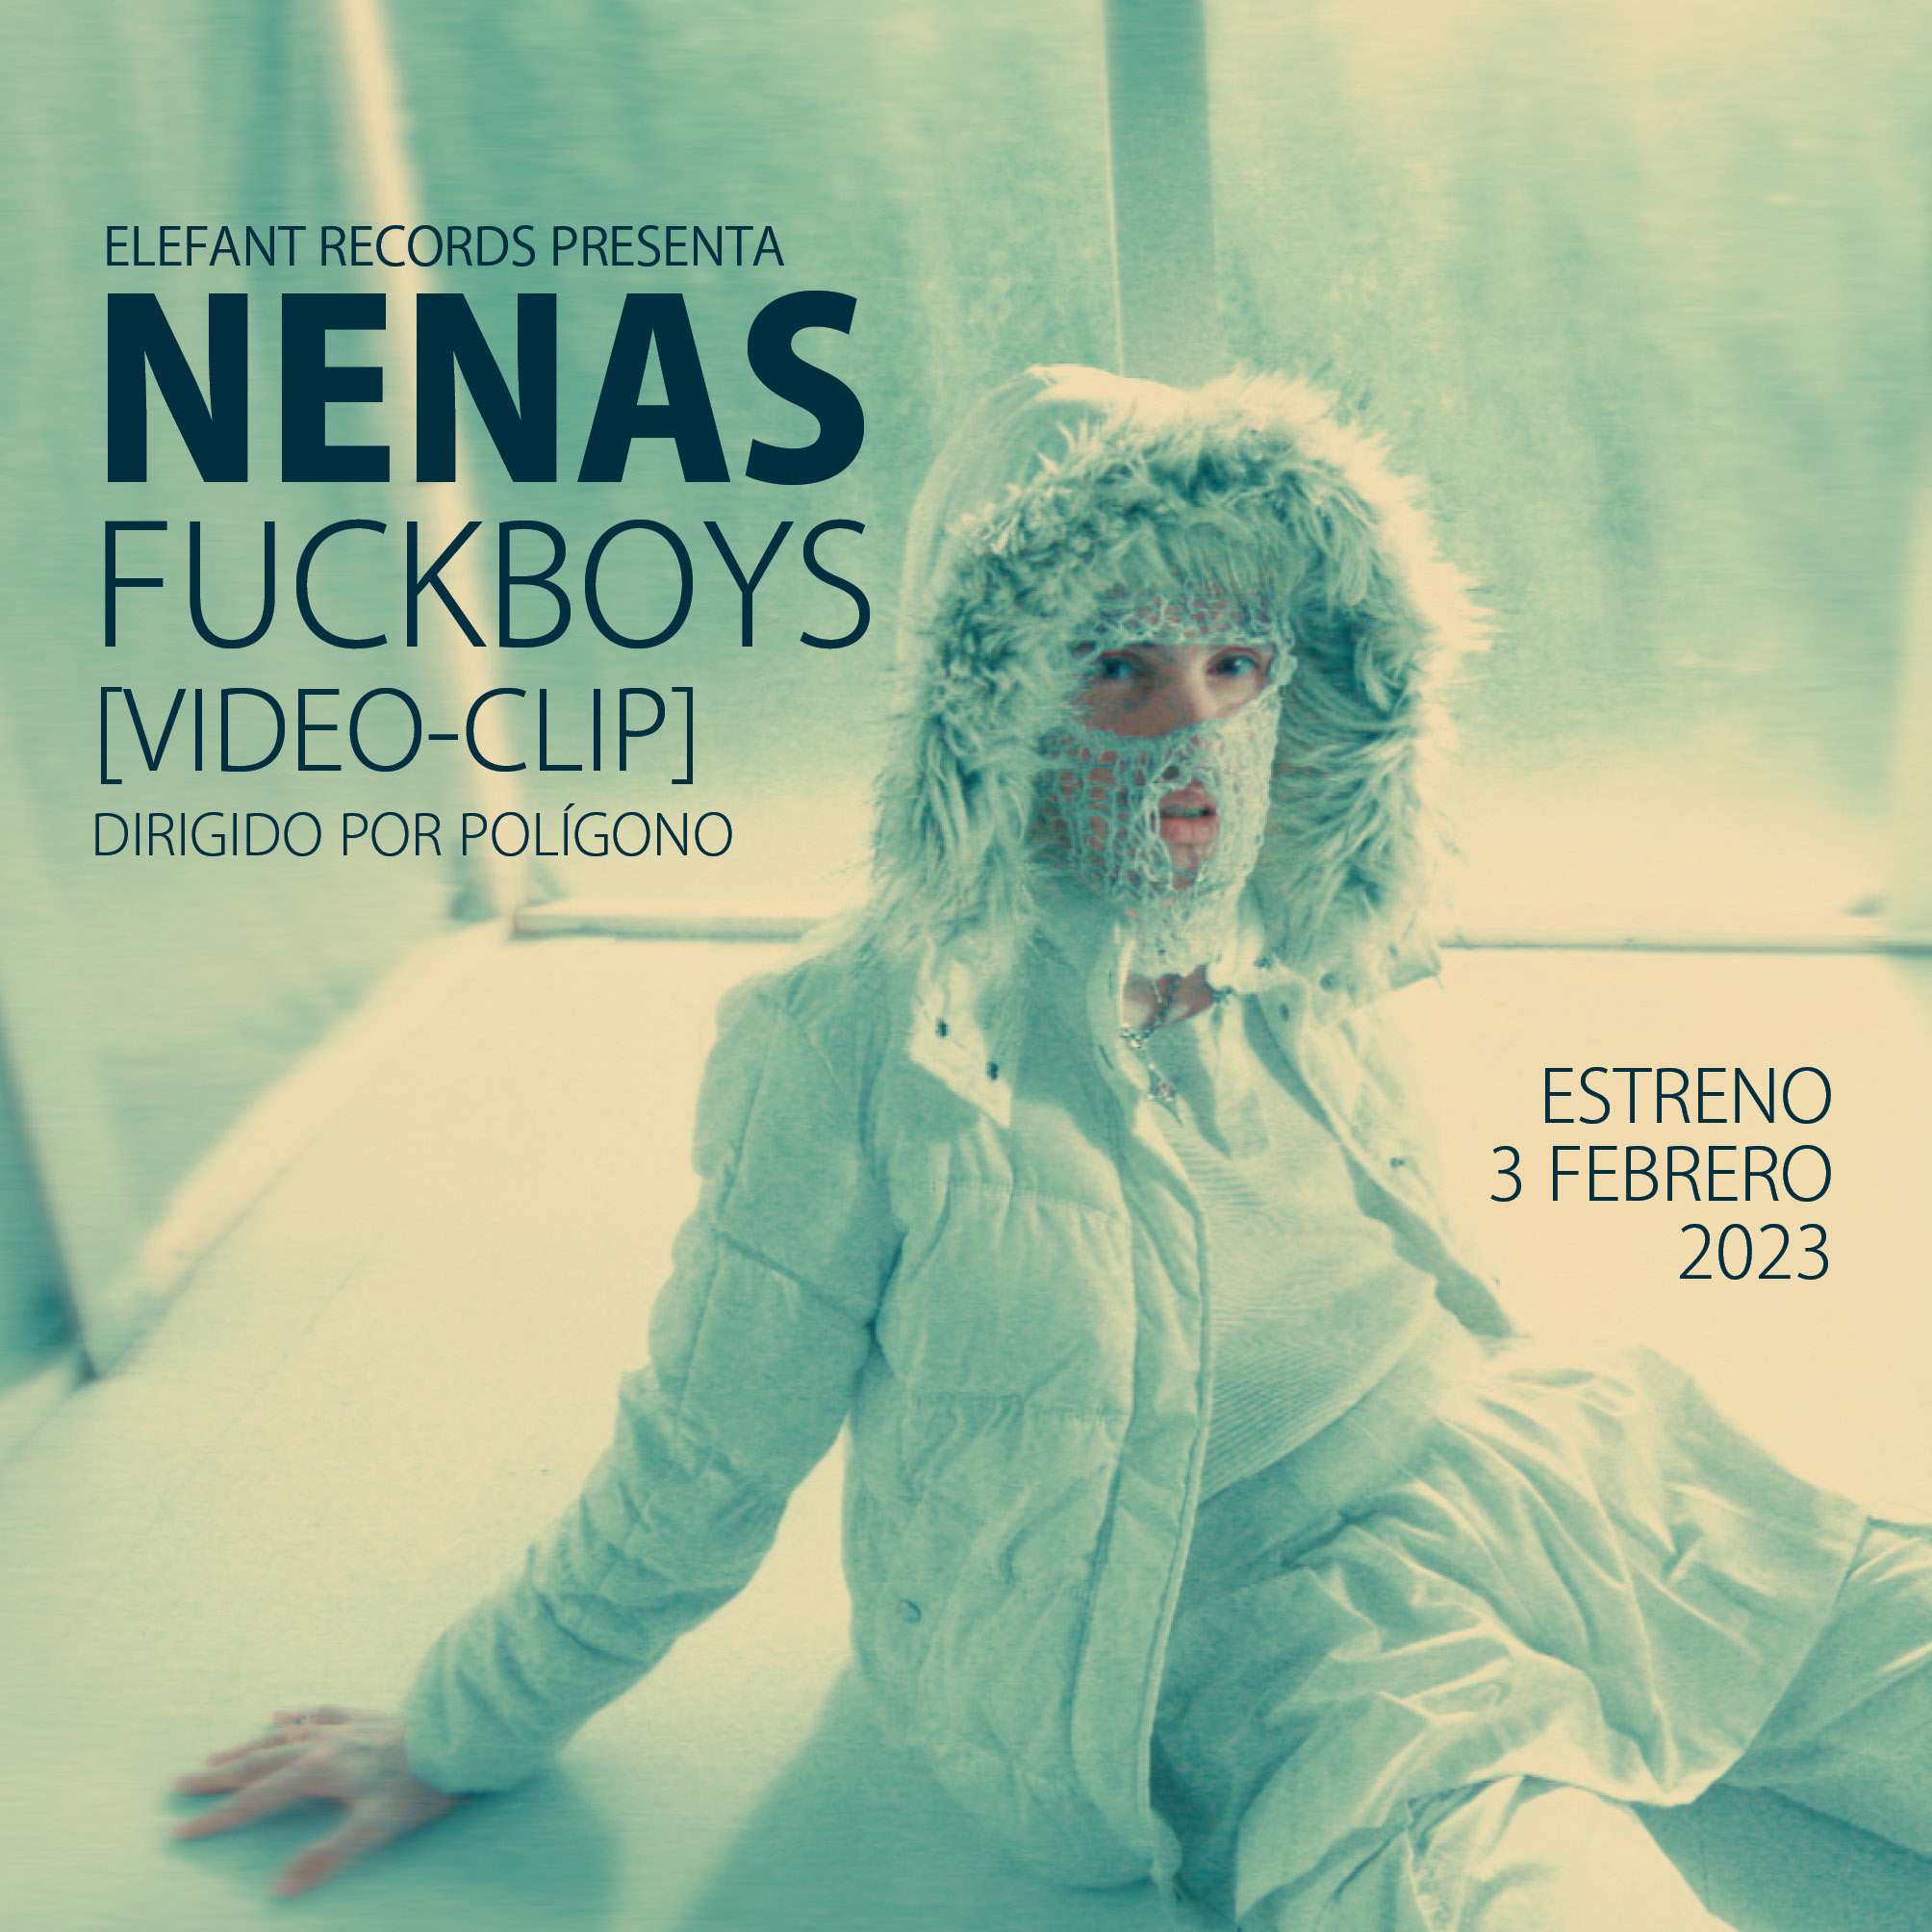 NENAS "Fuckboys" Single Digital and Video